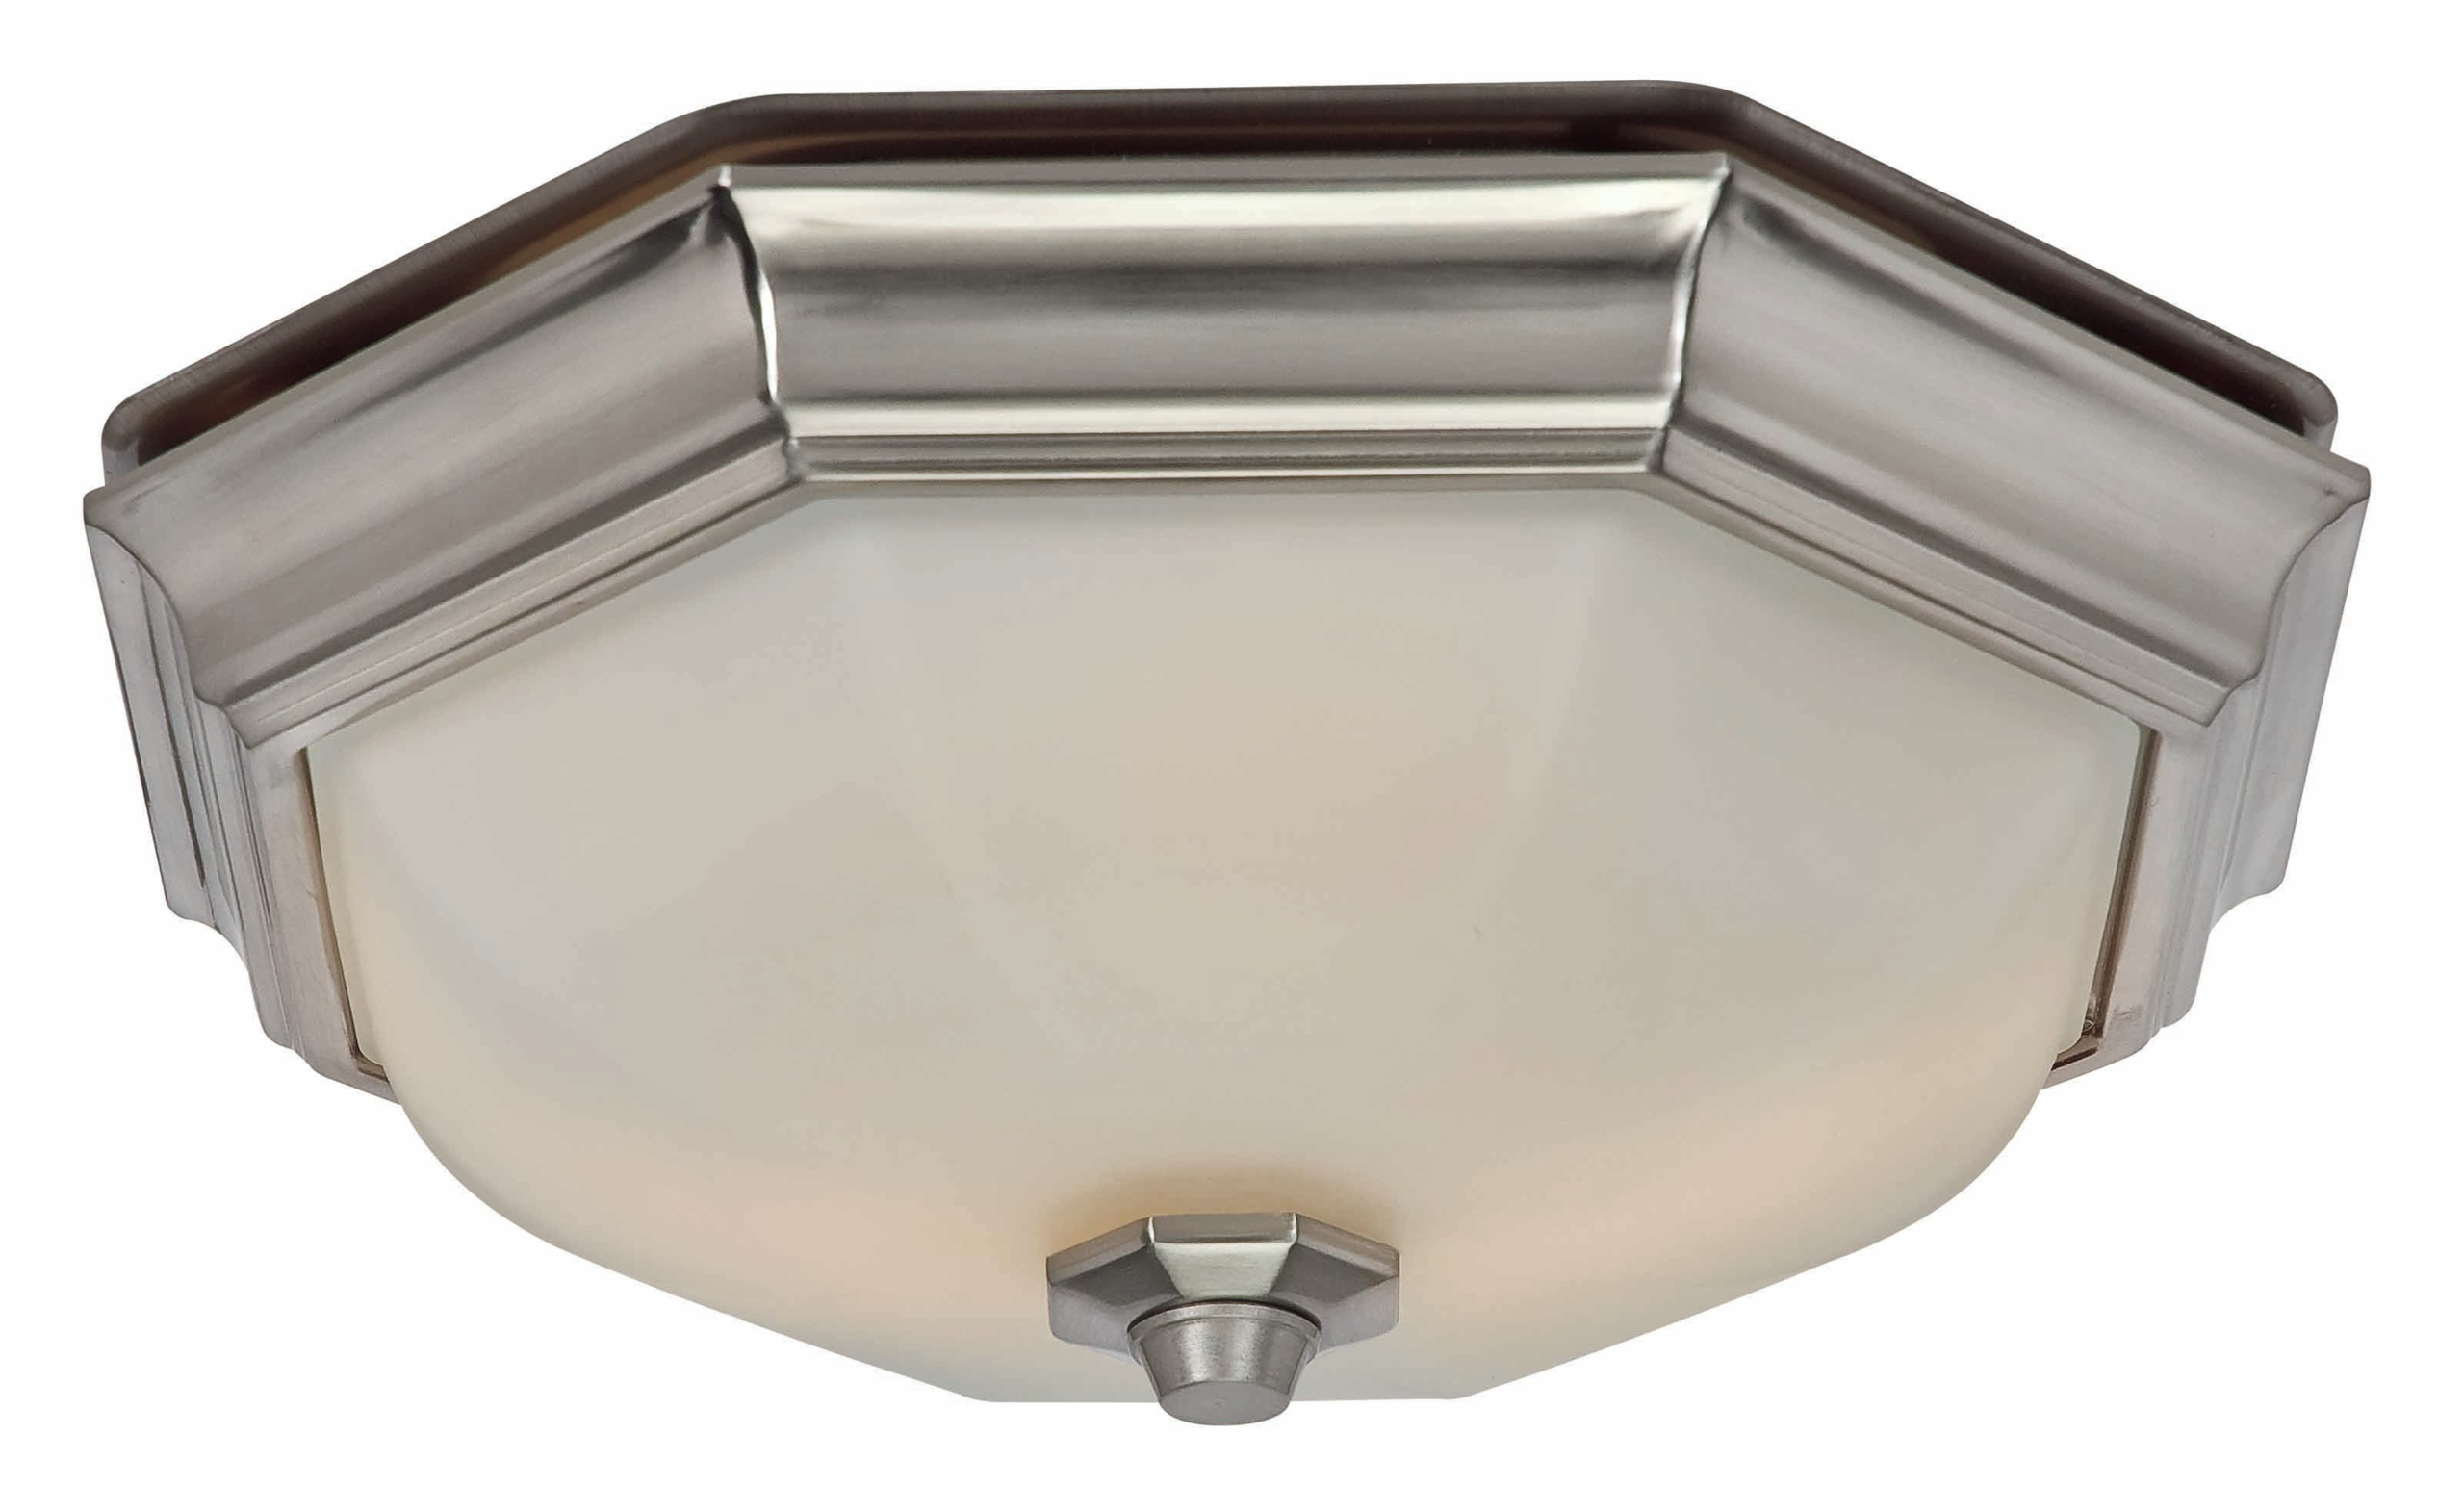 Huntley 80 CFM Bathroom Fan with Light